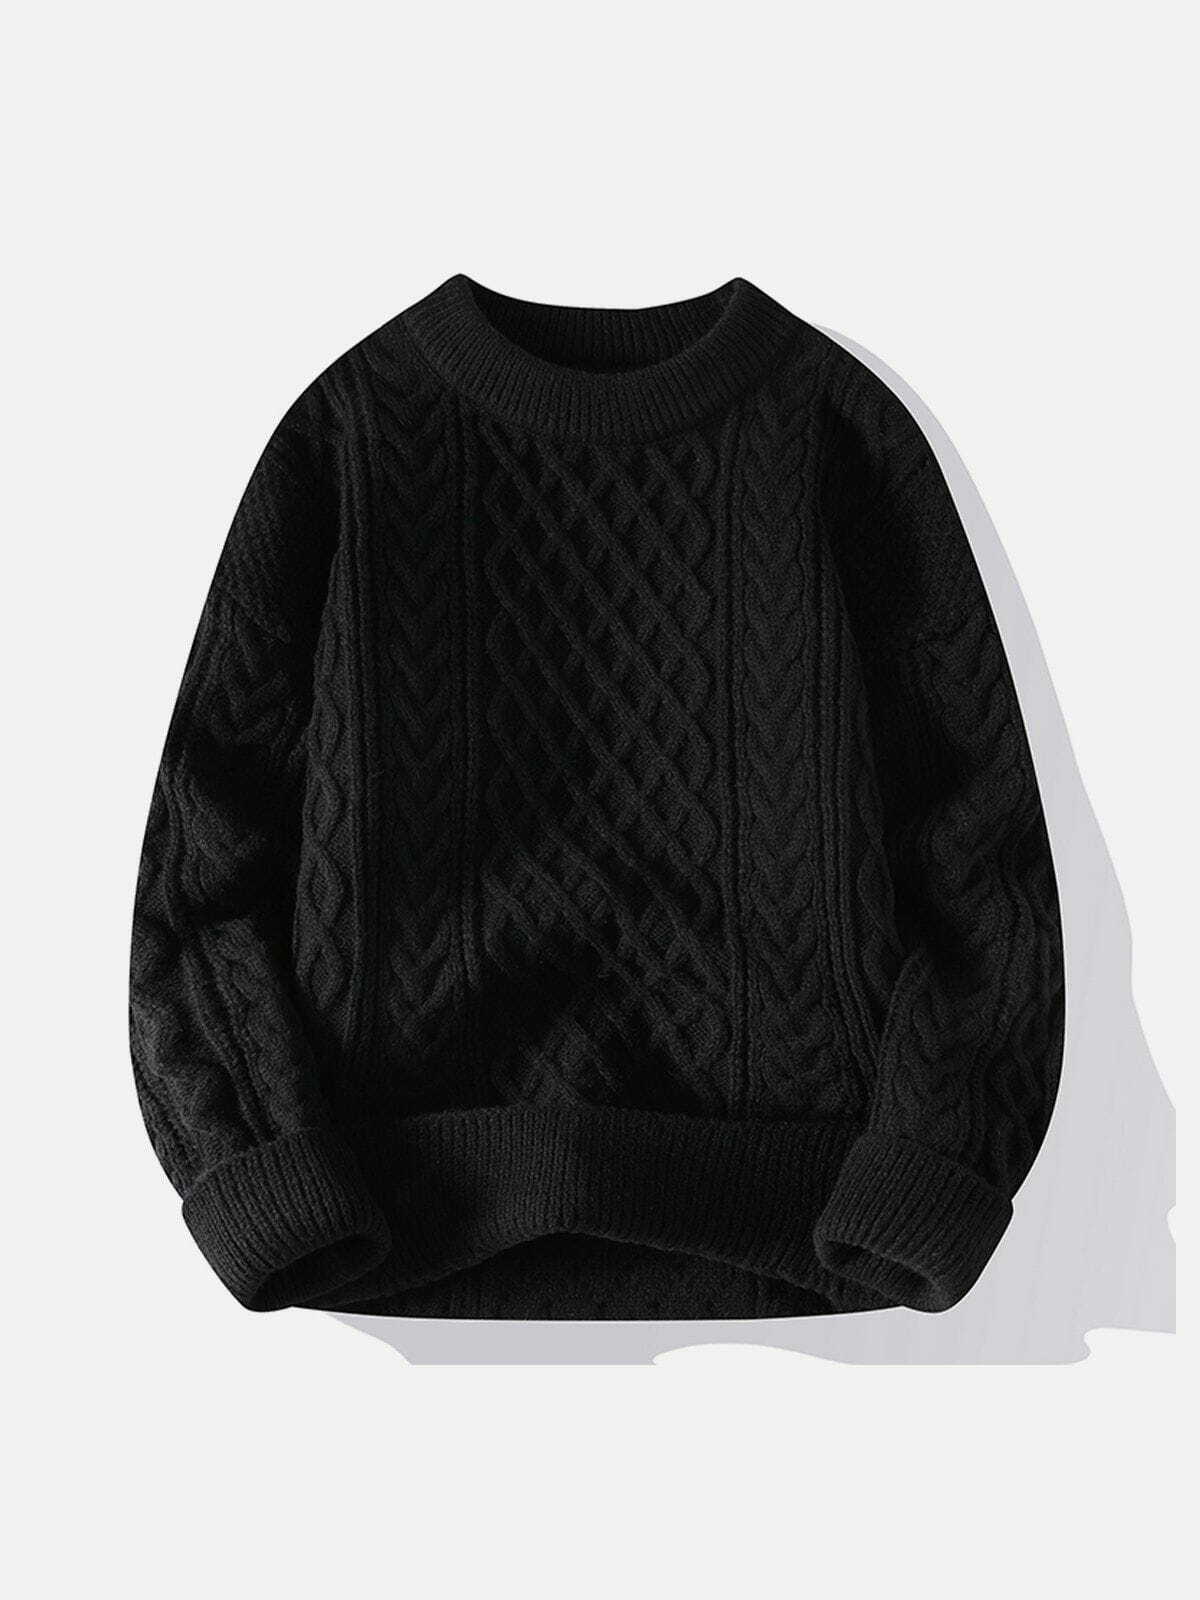 knit personality twist sweater retro & edgy streetwear 3266